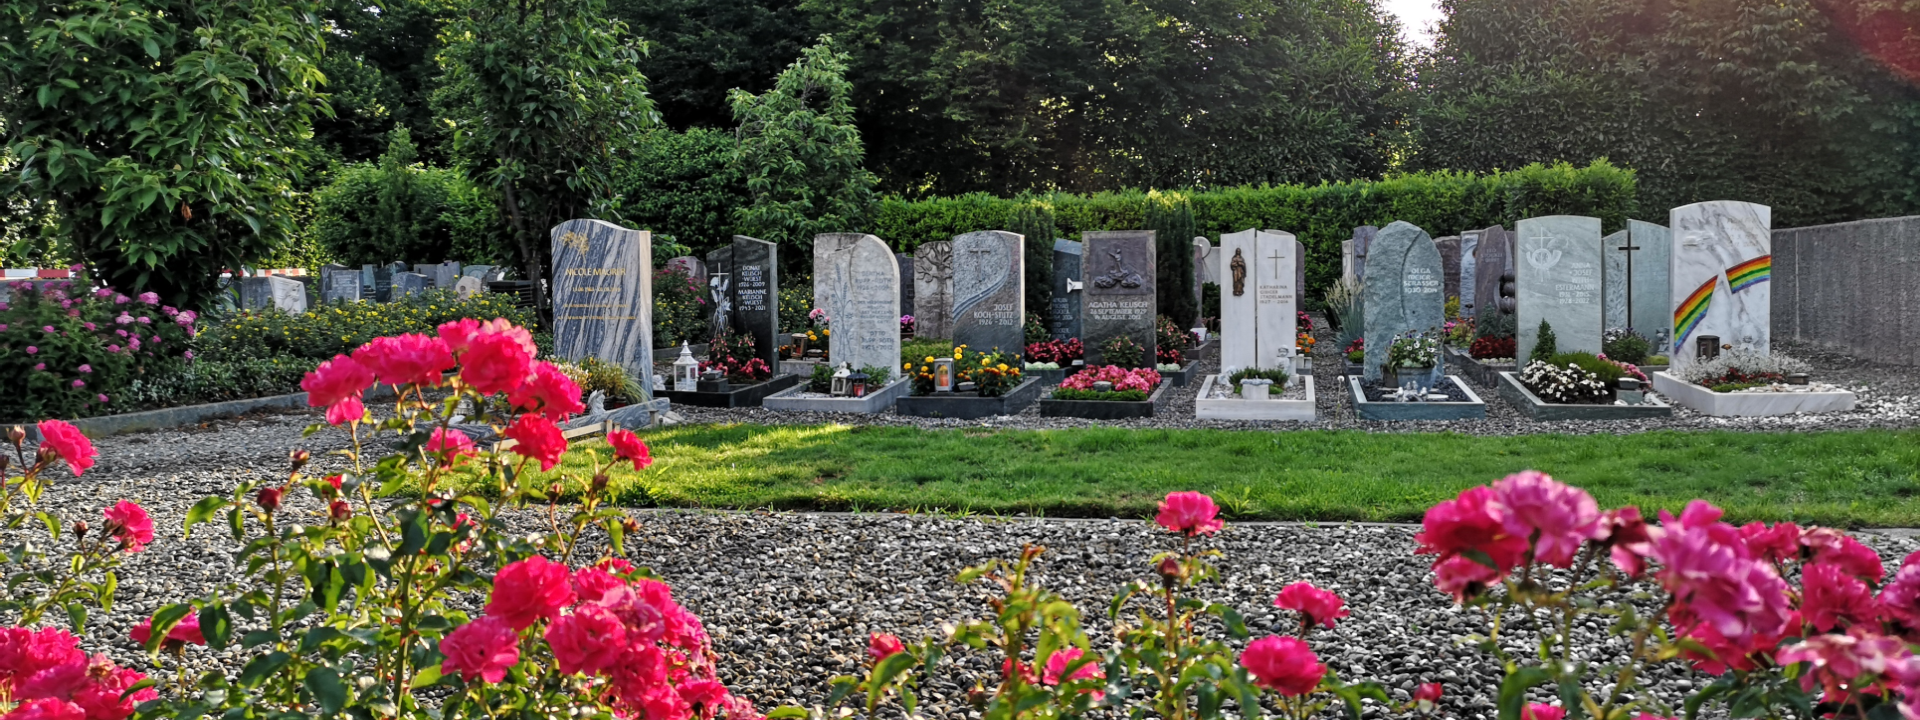 Friedhof Ortsteil Hermetschwil-Staffeln